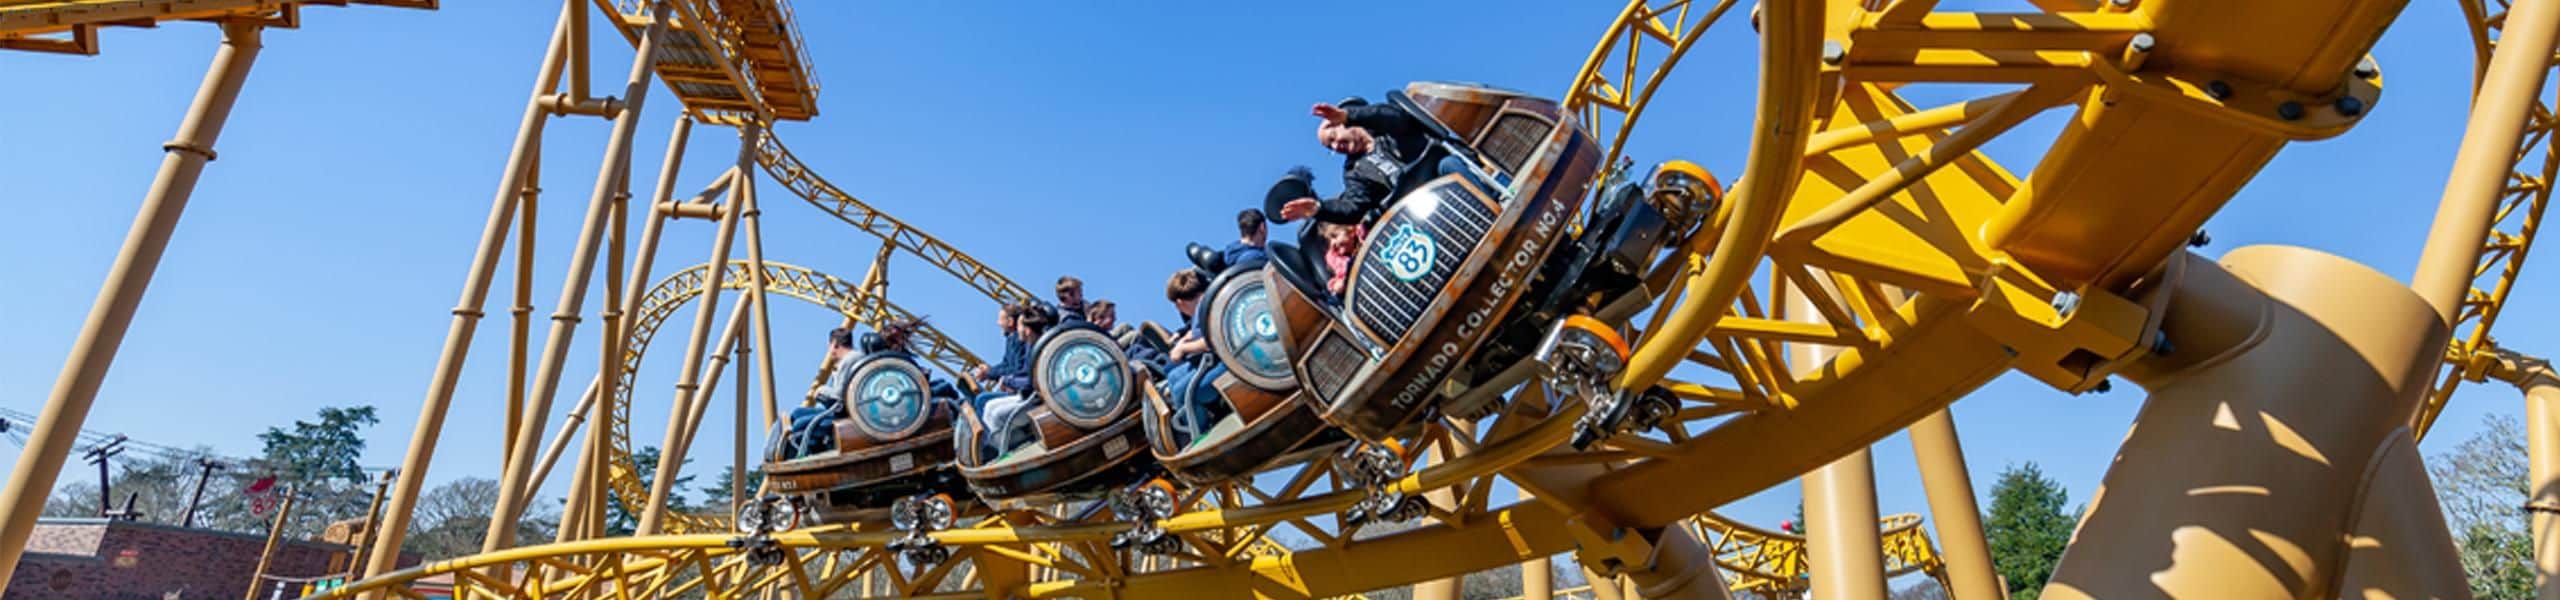 Storm Chaser Family Spinning Roller Coaster| Paultons Park